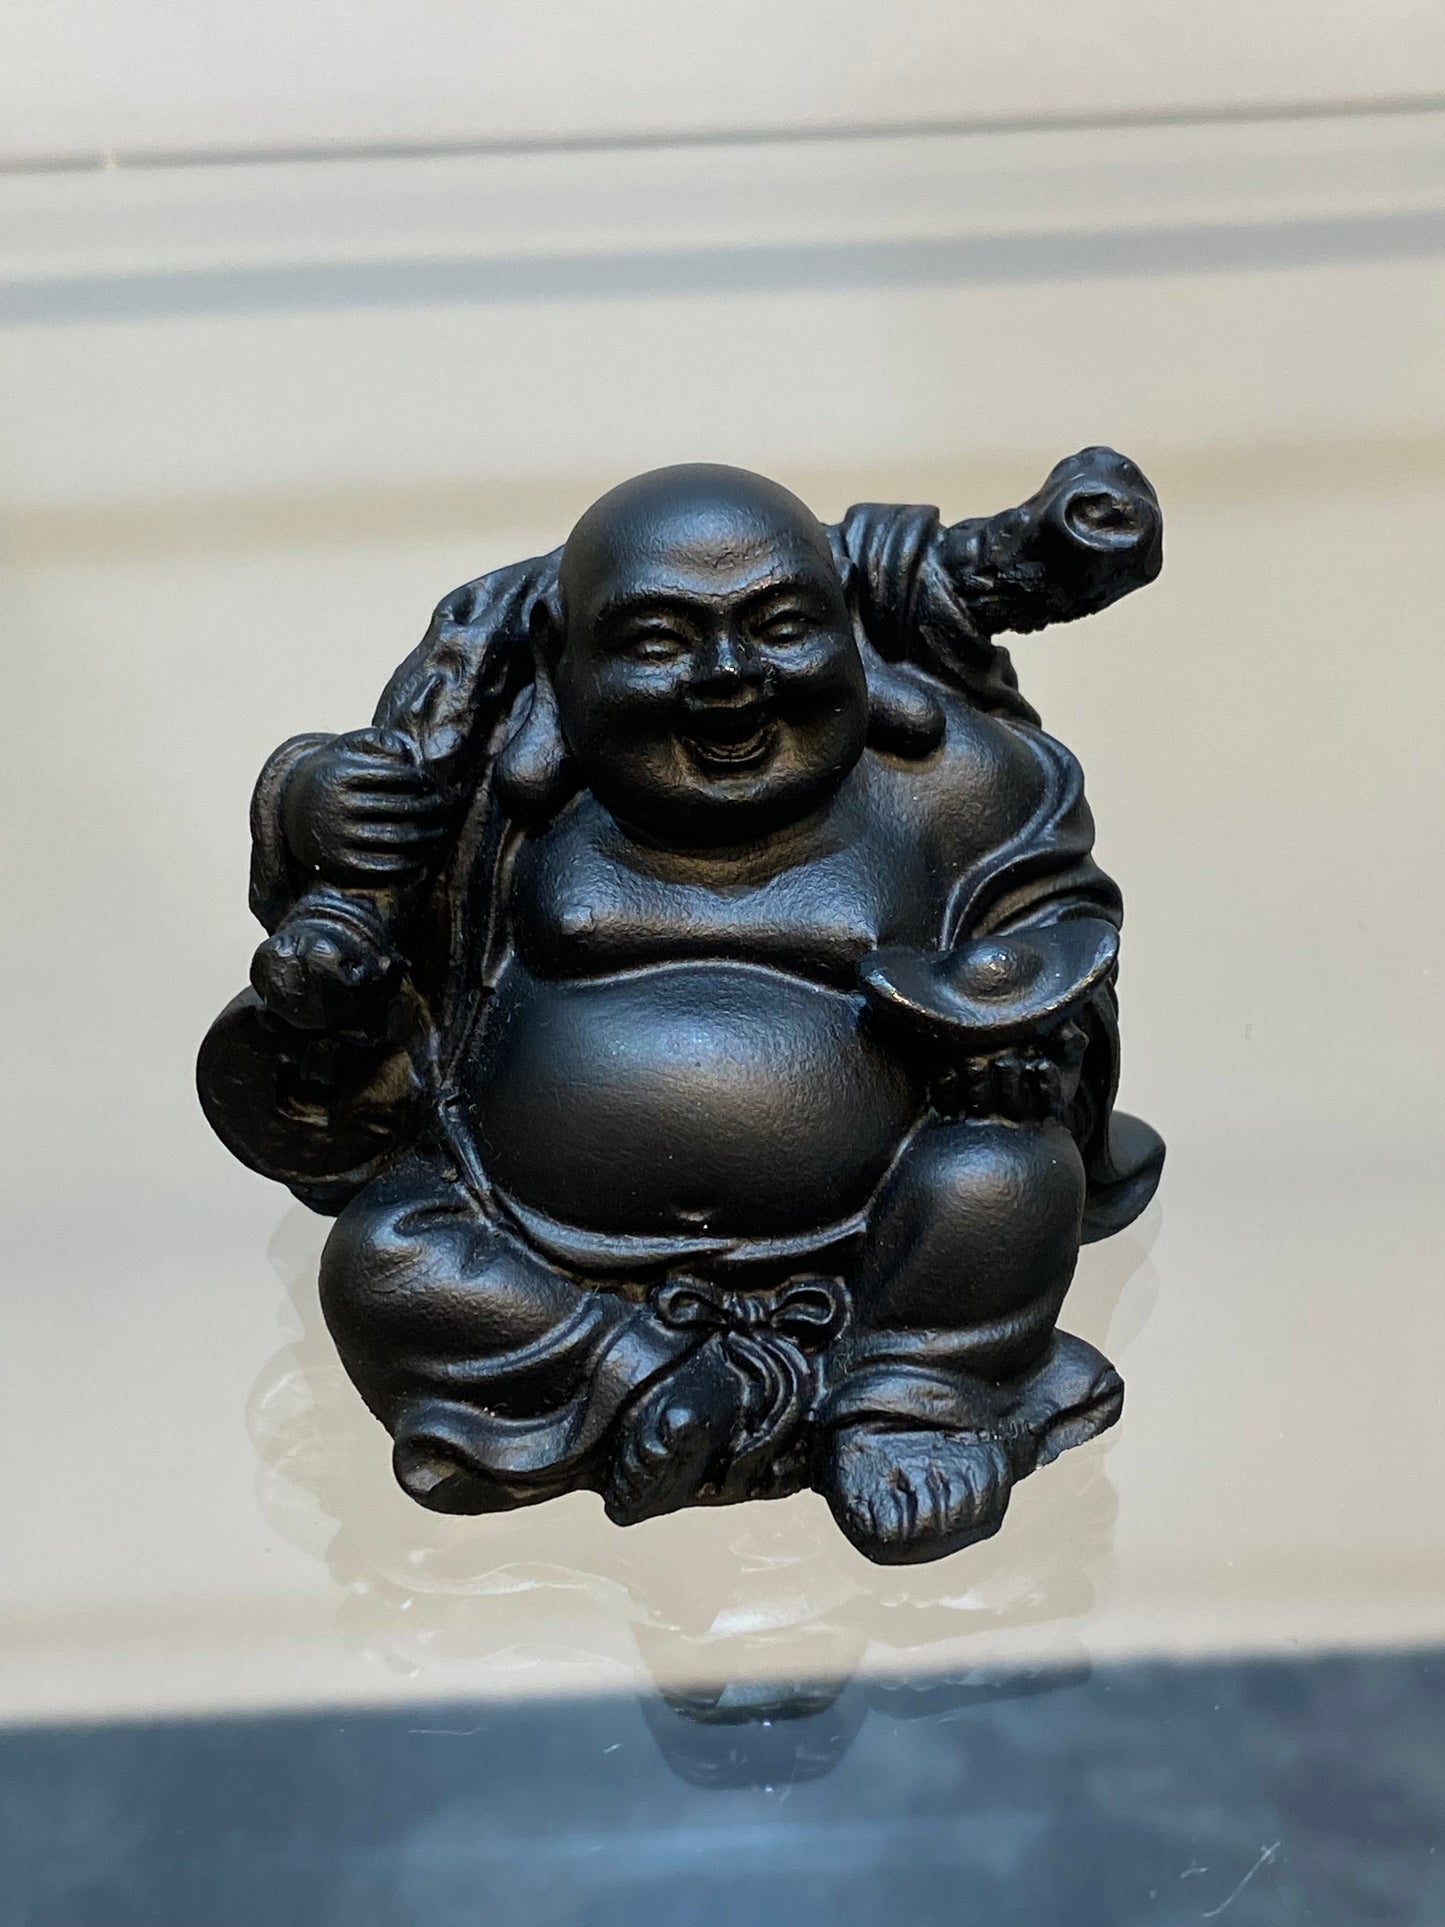 Black Mini Laughing Sitting Buddha with Bag of Plenty a symbol of abundance